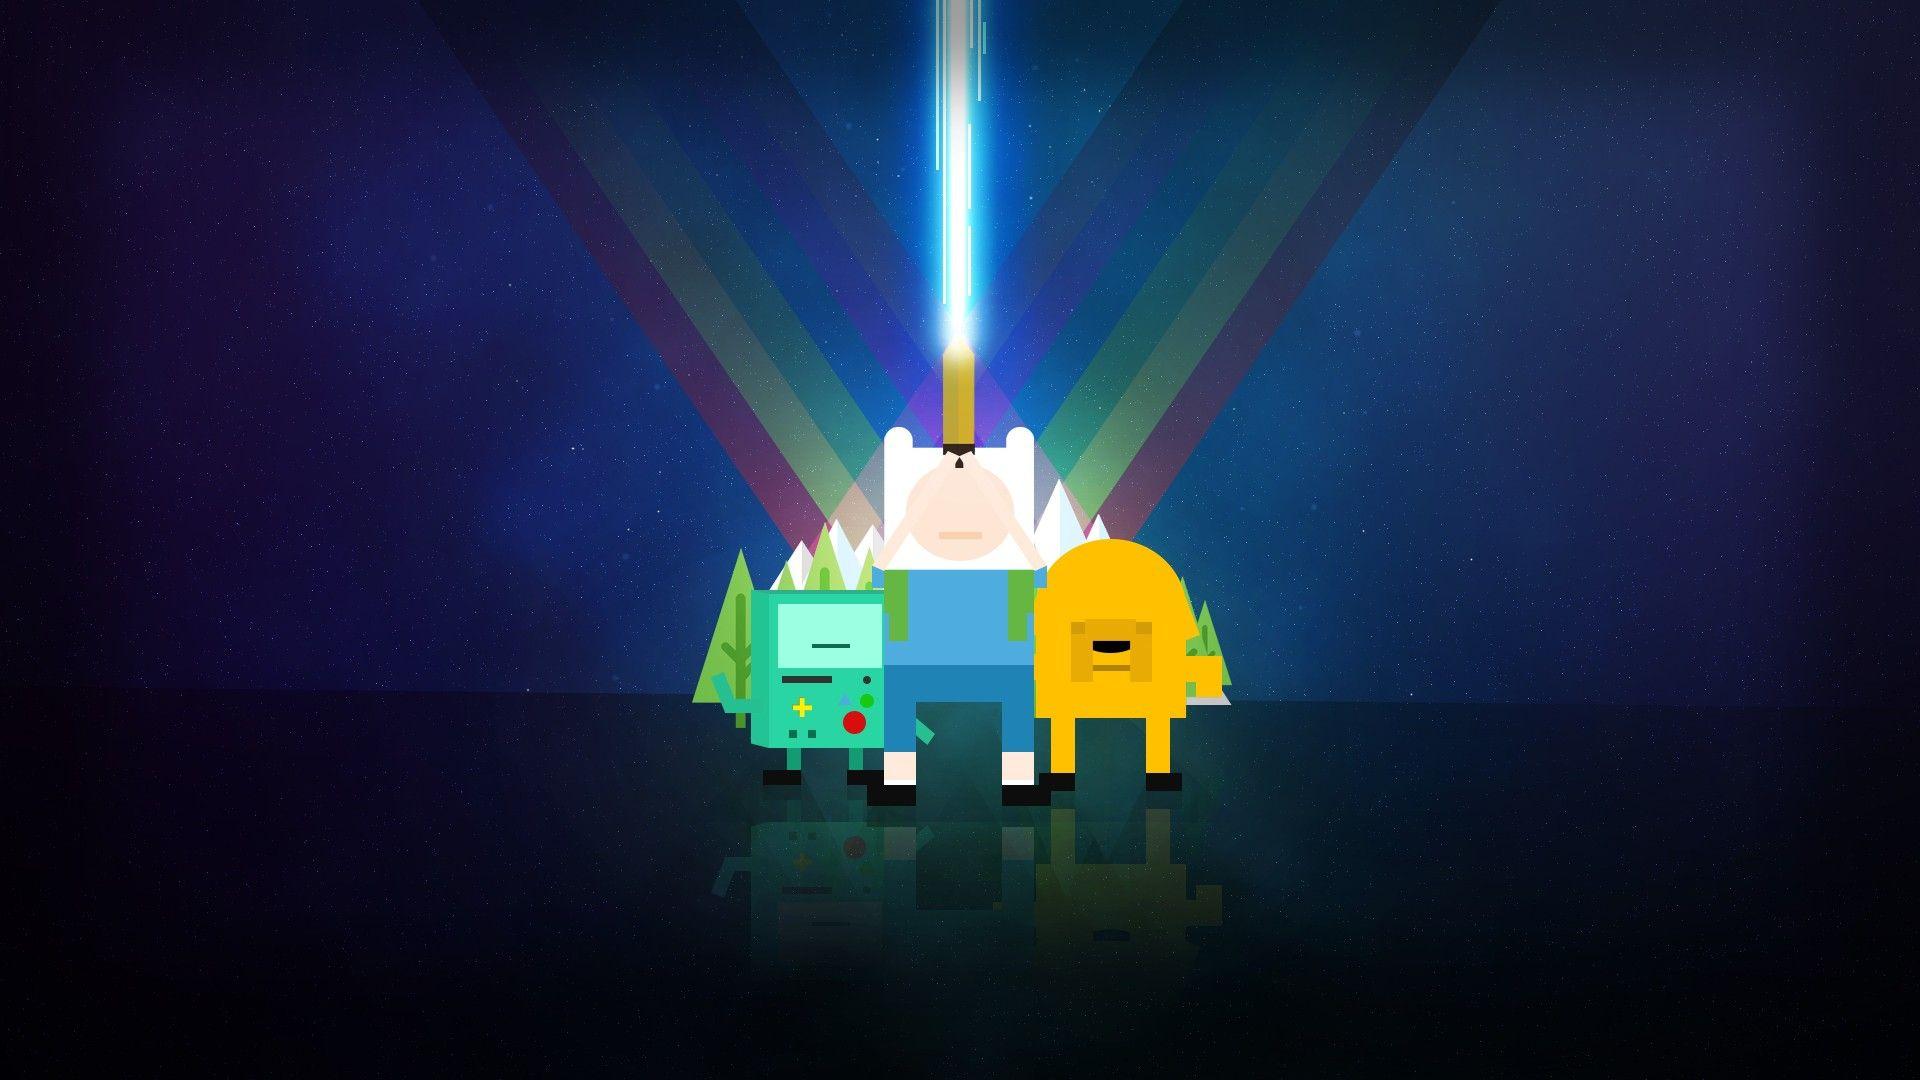 Cartoons Cartoon Network Adventure Time pixelated Finn and Jake